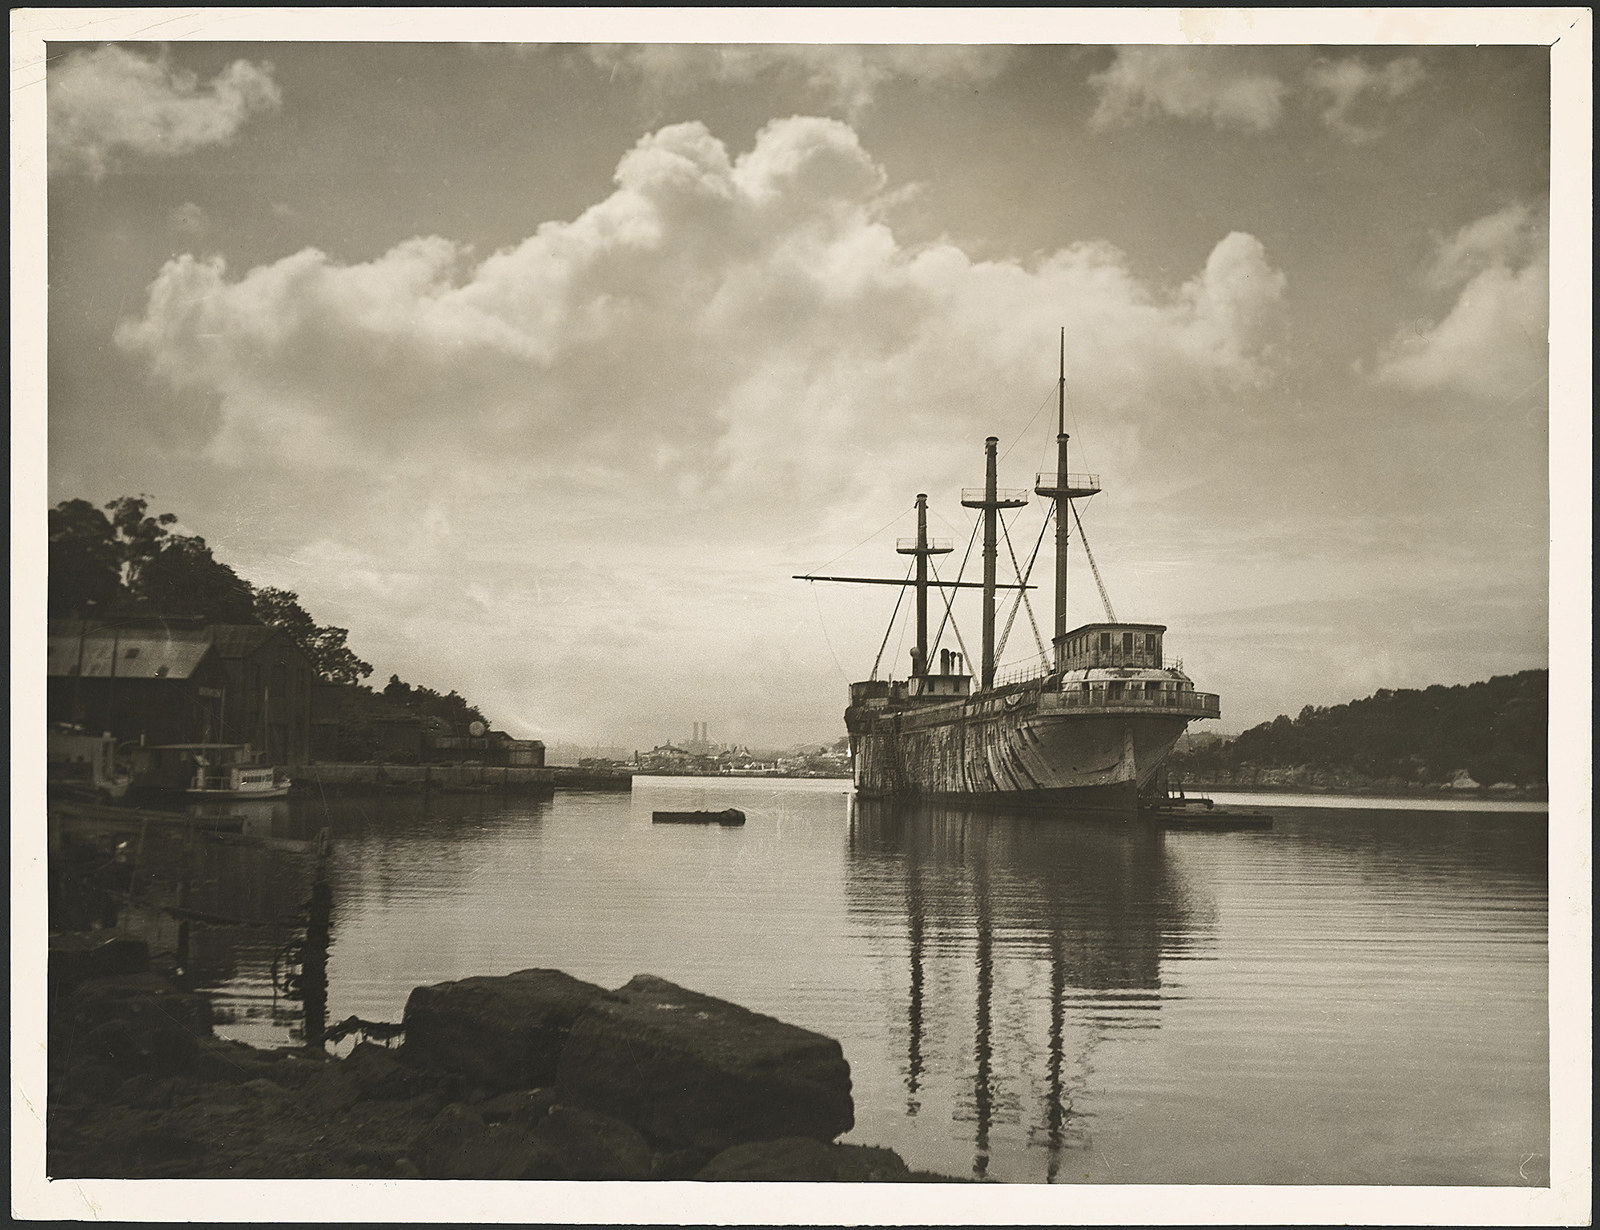 Hulk of the Sobraon, later HMAS Tingira, Berrys Bay, Sydney Harbour